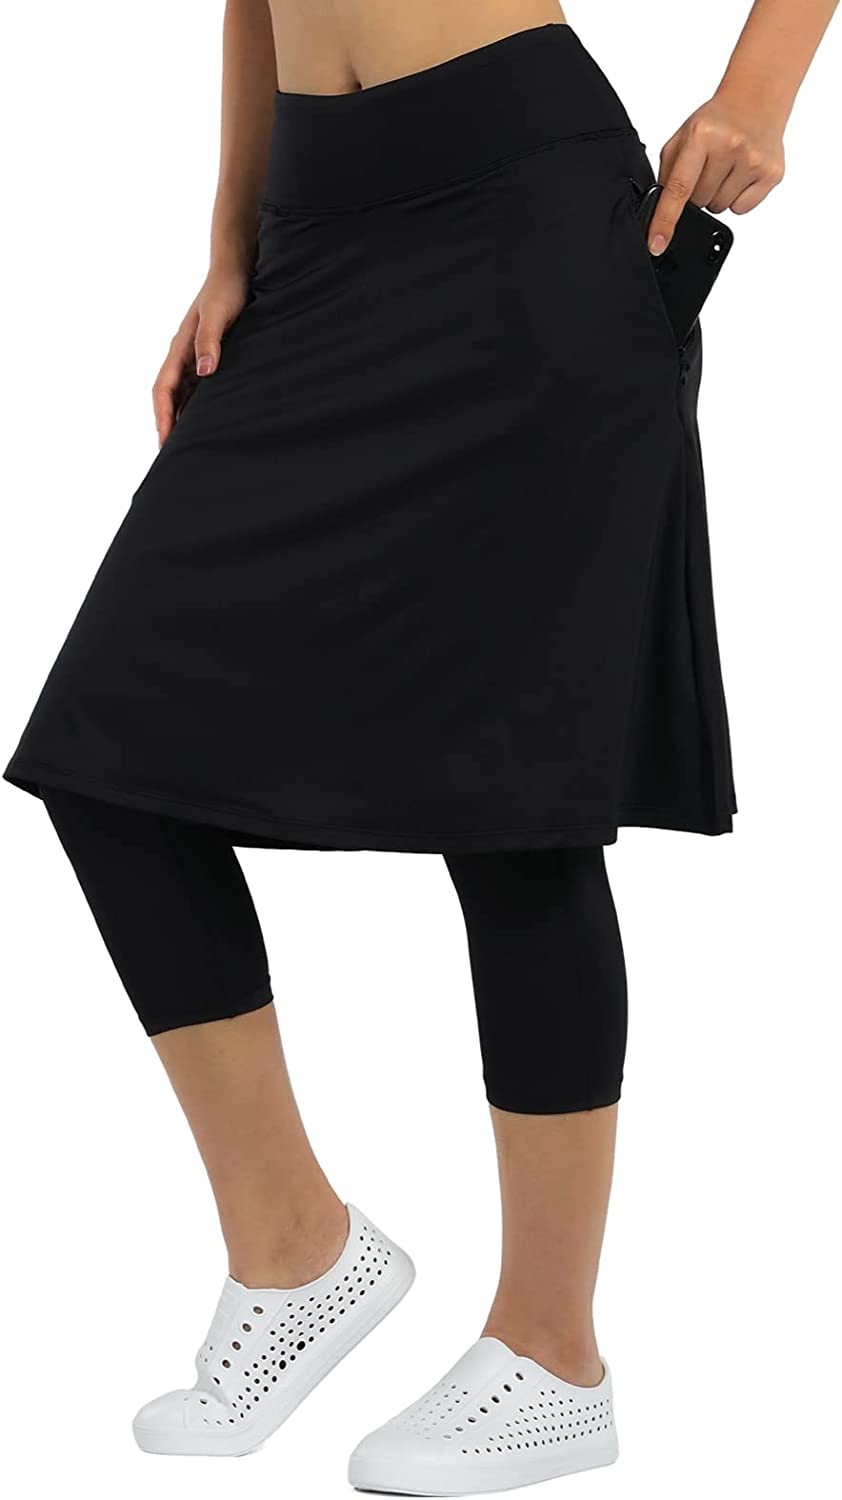 HOT Trousers Irregular Hem Women's Skirt Leggings Pants Sports Fitness  Workout Y | eBay